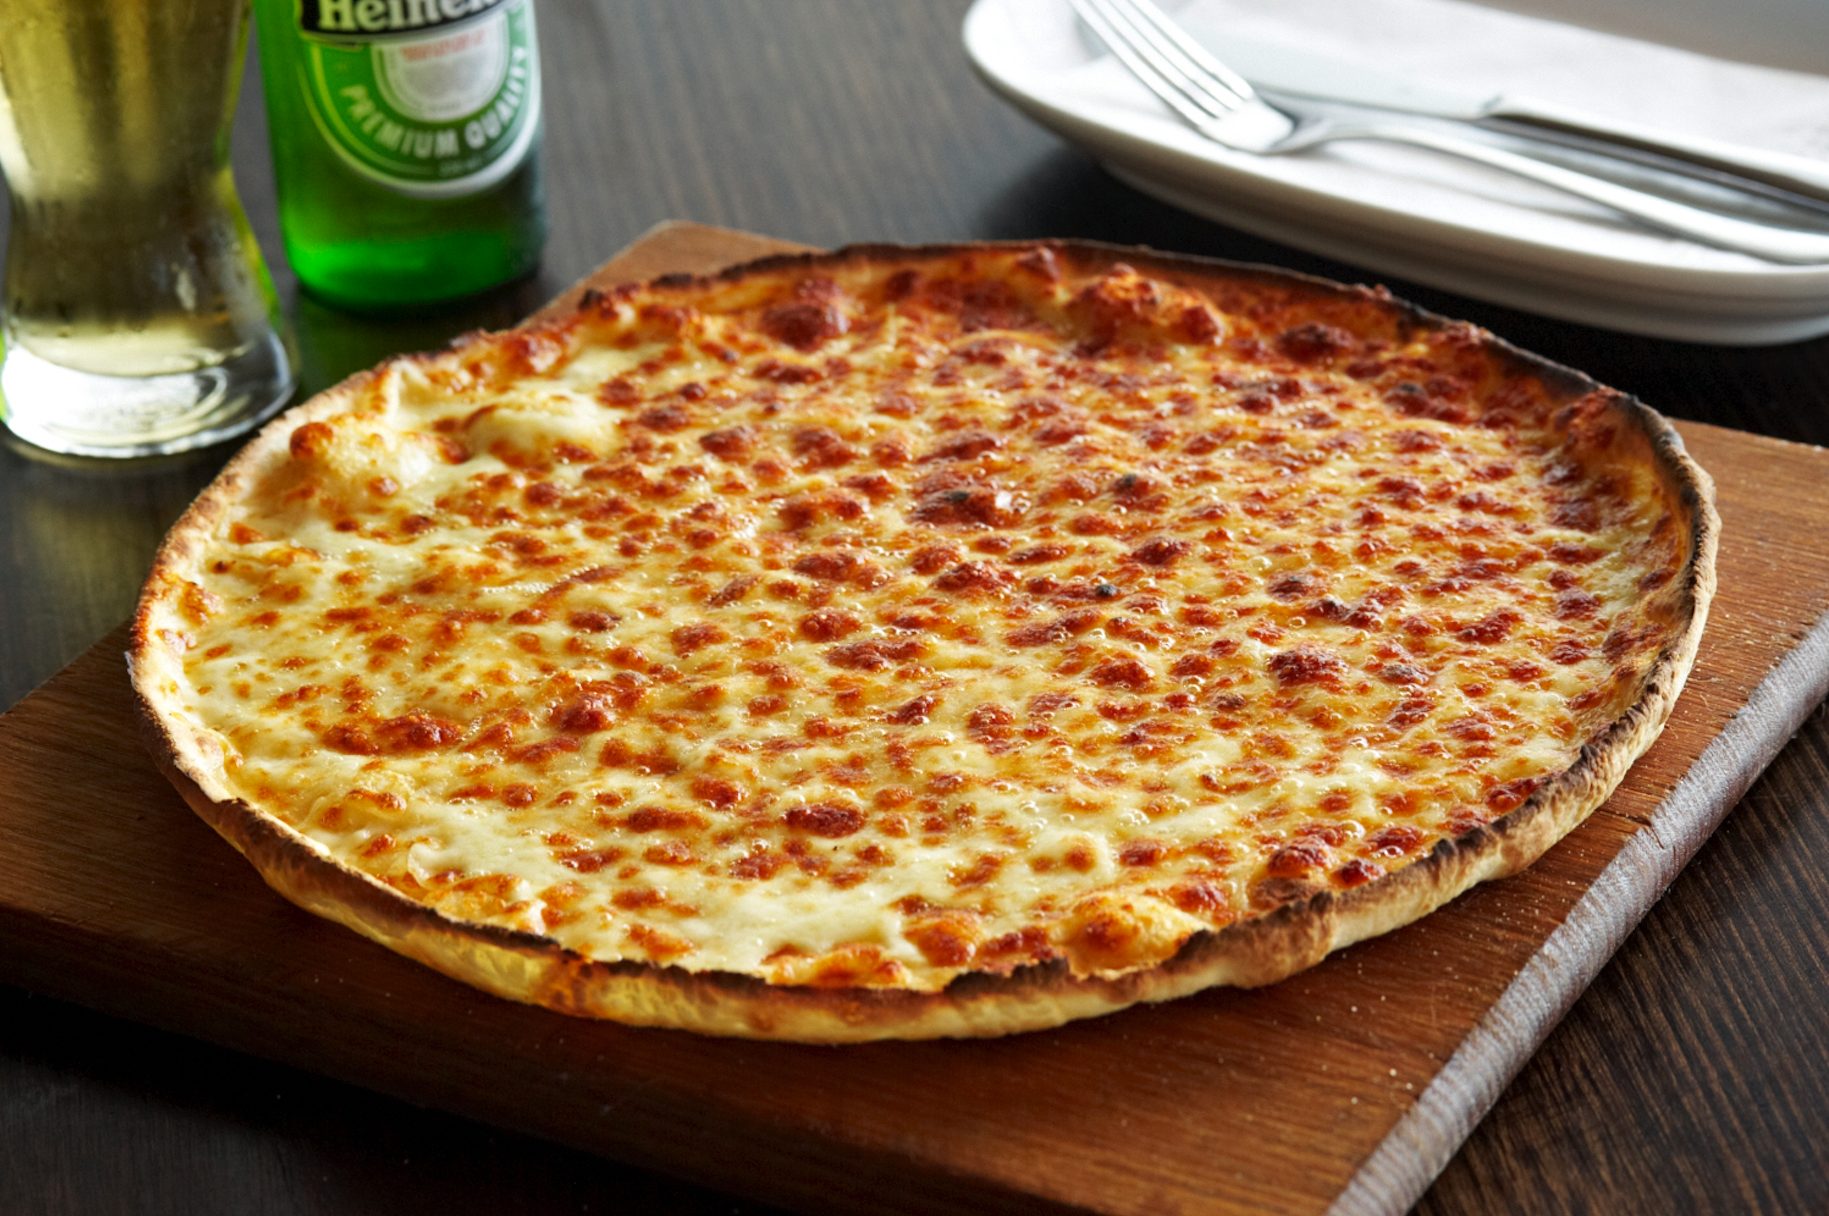 DEAL: Bondi Pizza - Free Garlic & Cheese Pizza with $45 Spend via DoorDash 4